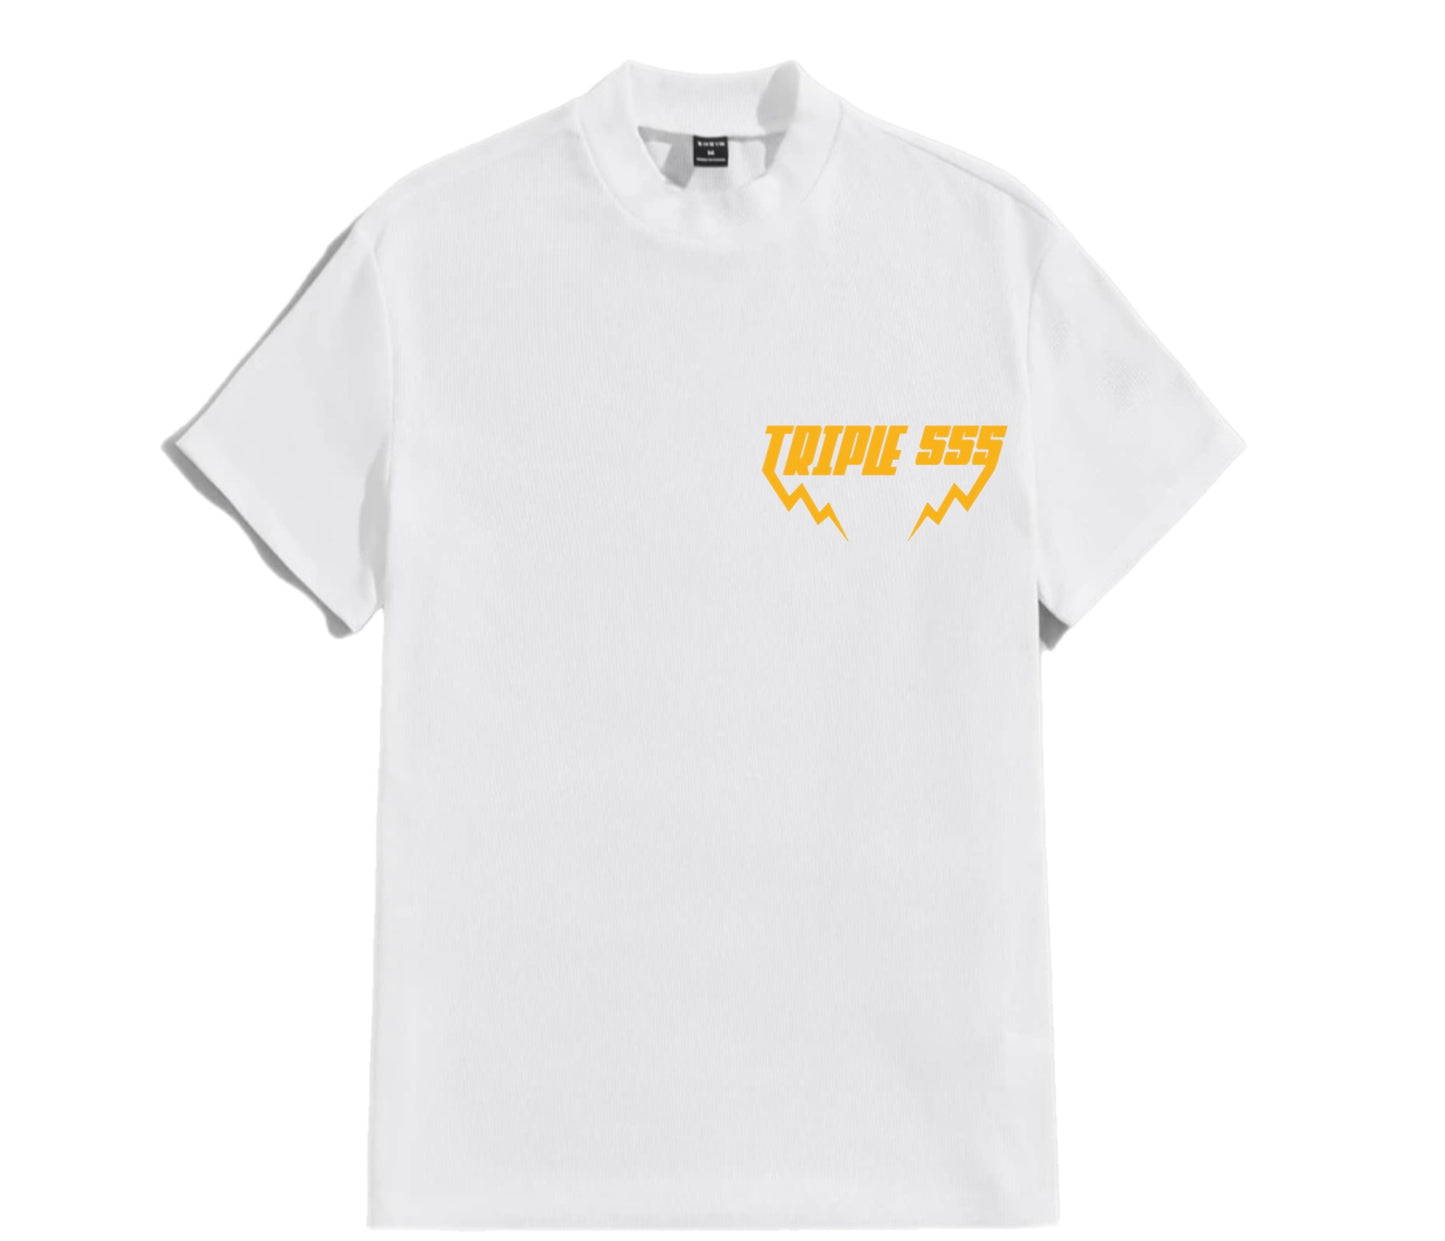 Triple 555 T-Shirts